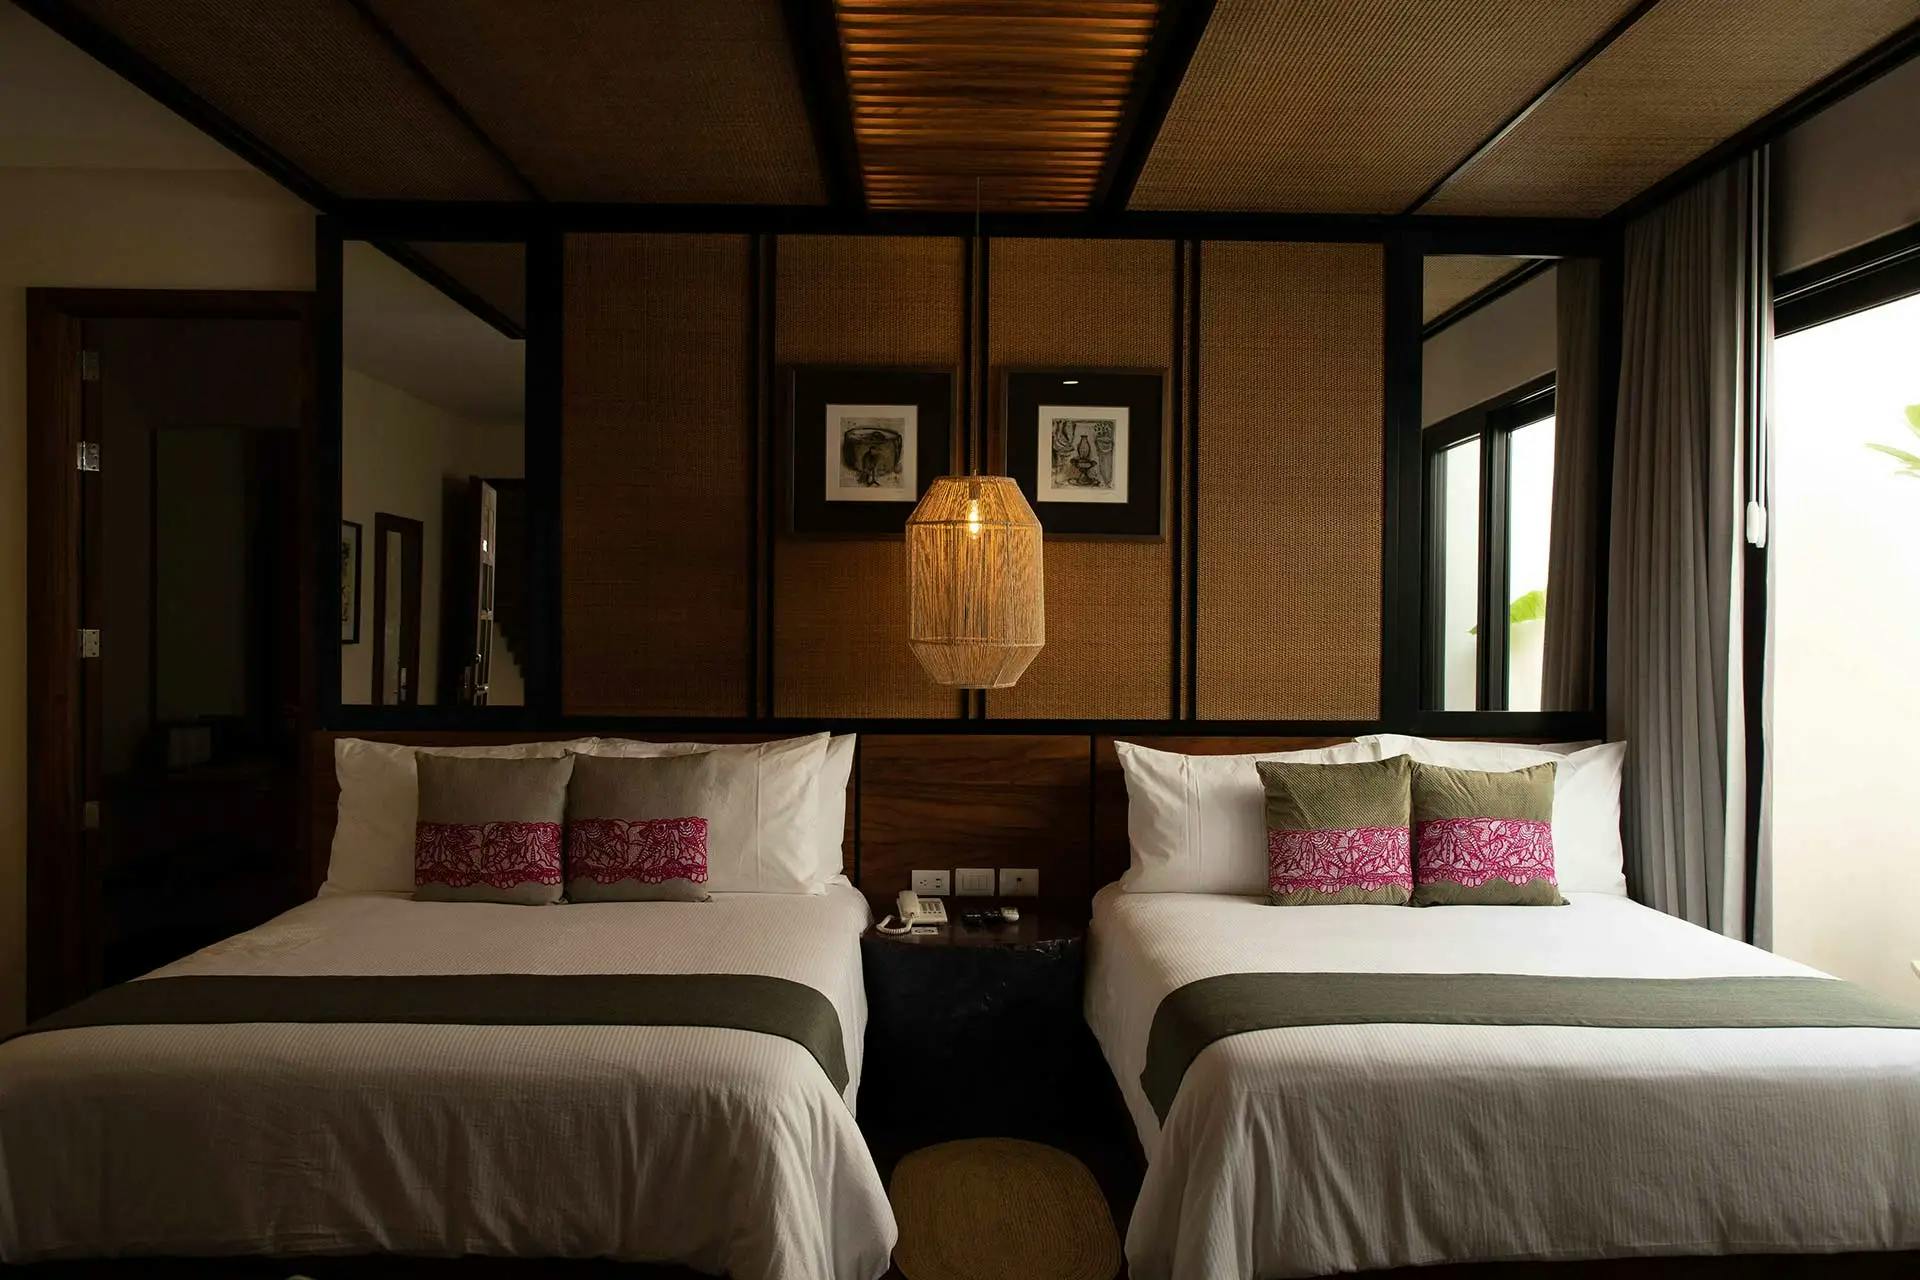 queen-size-beds-in-hotel-room-master-double-suite